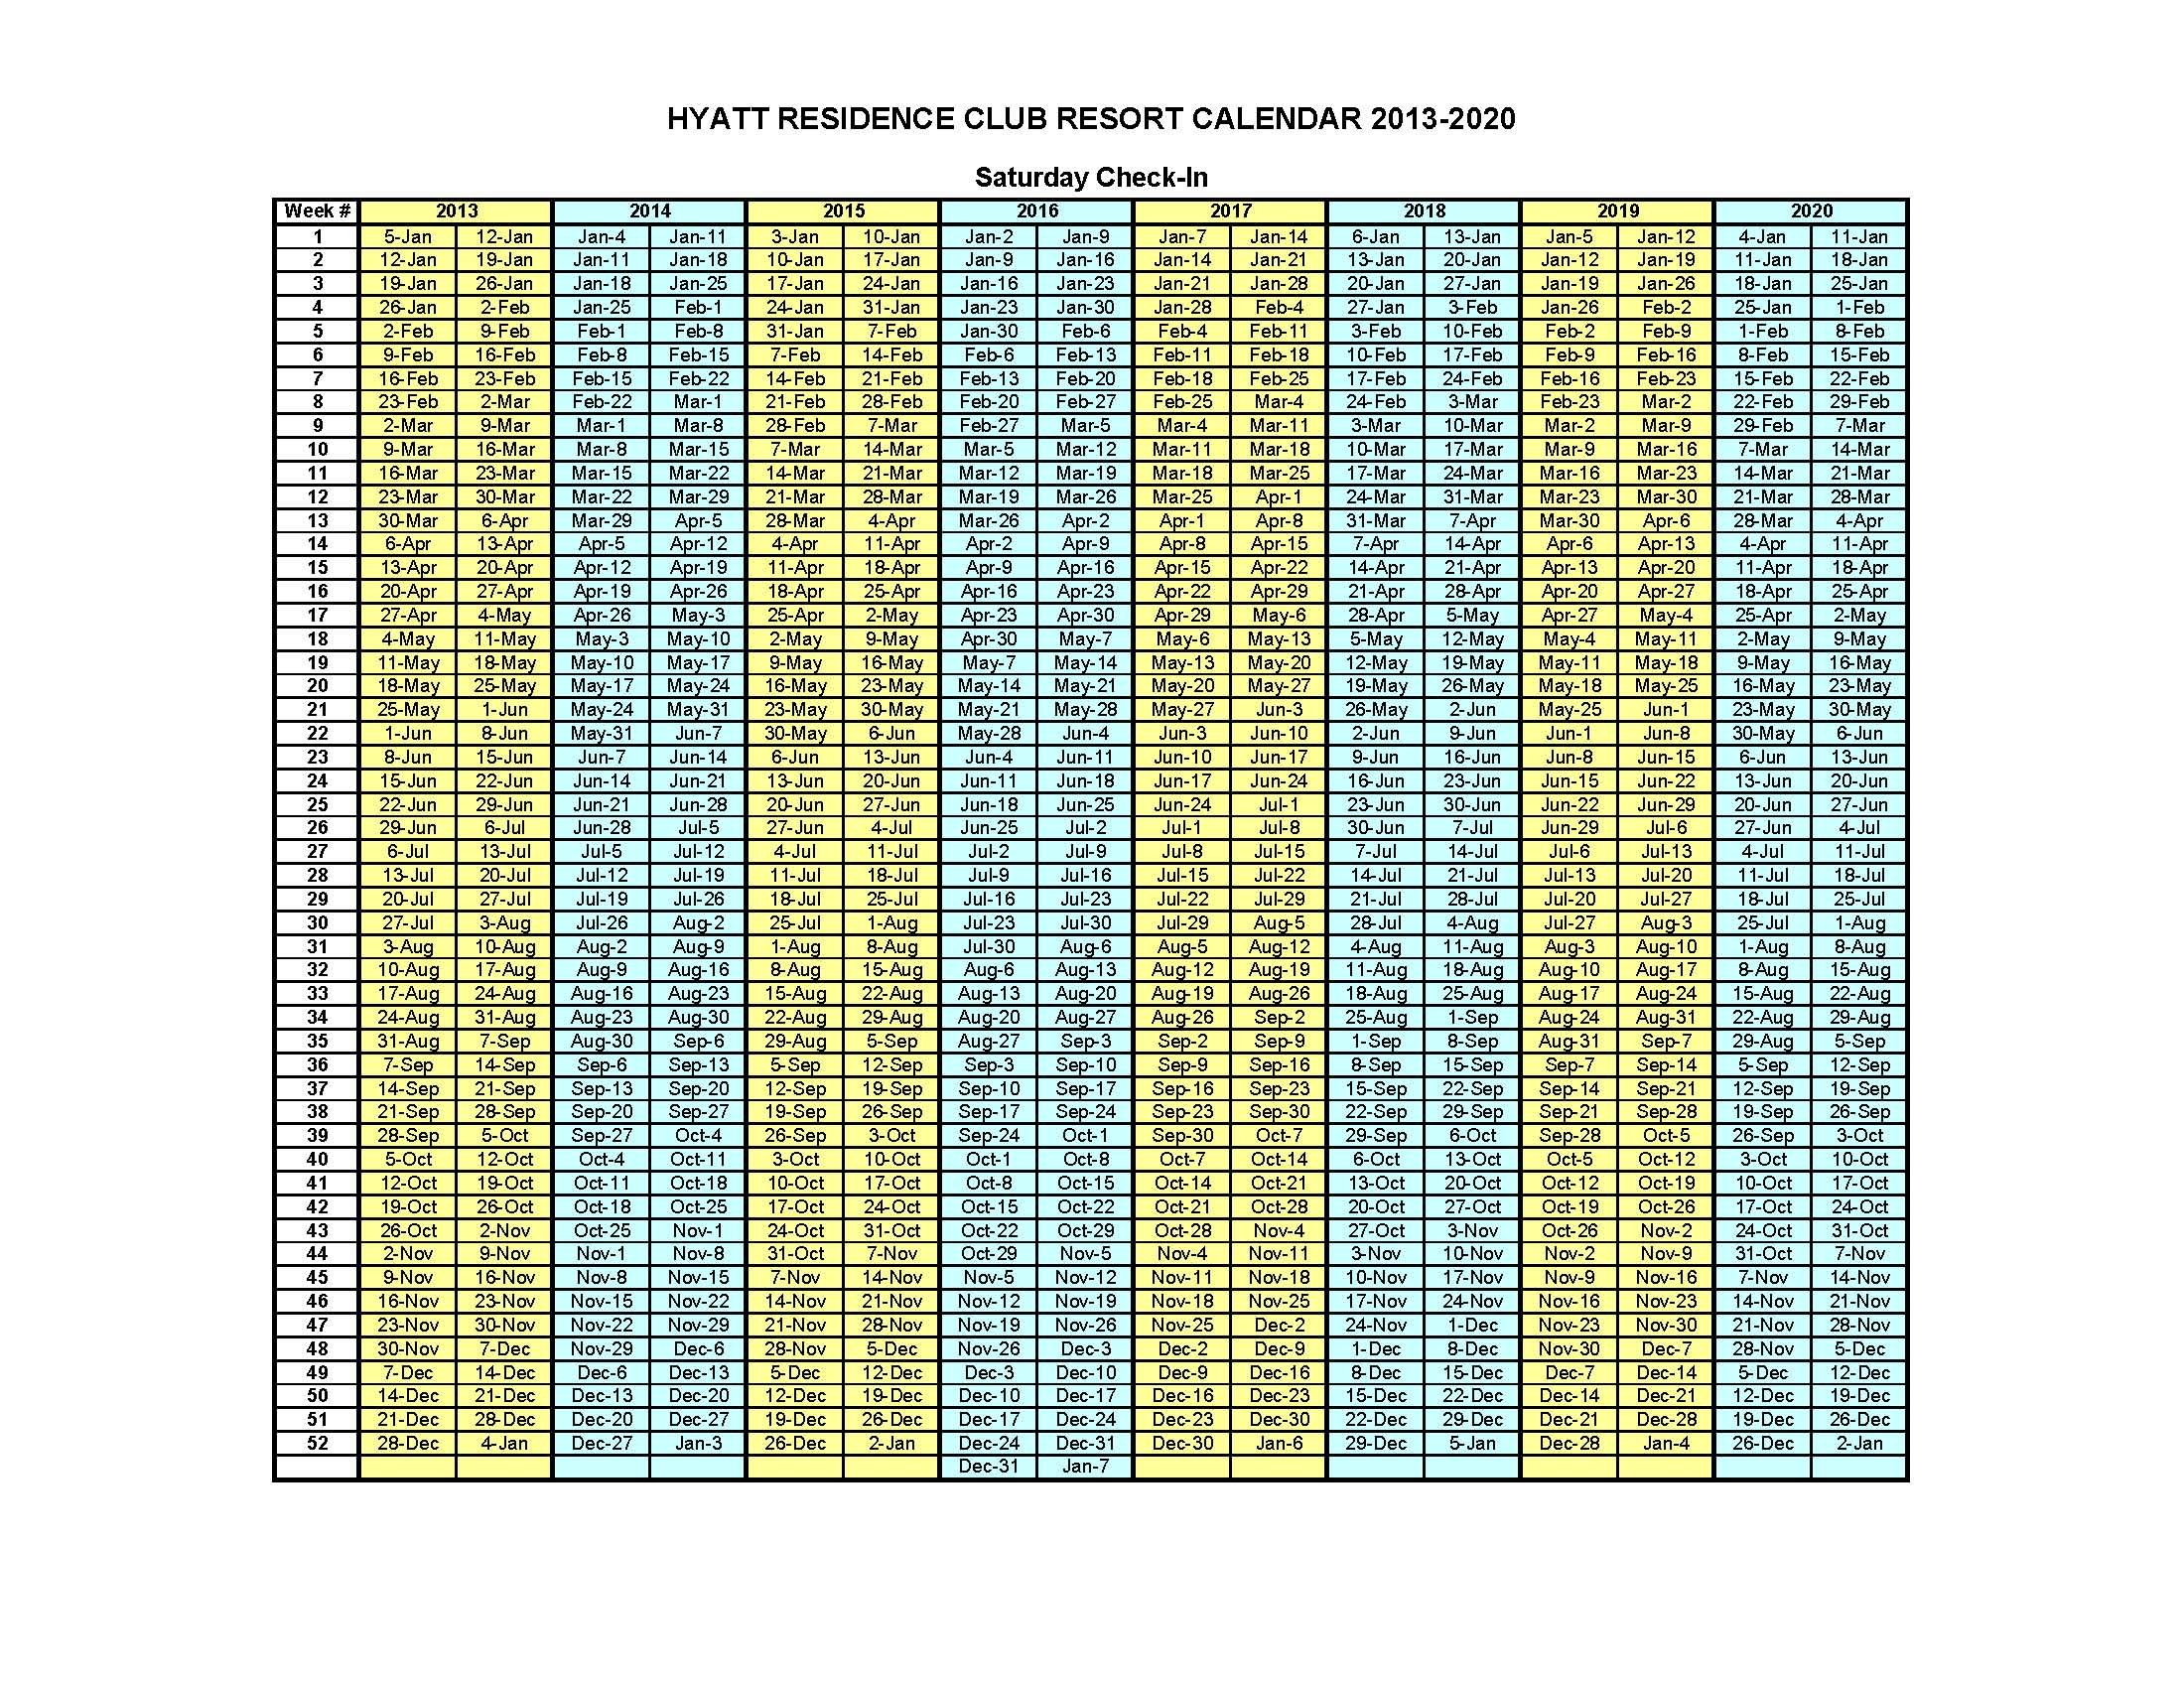 Hyatt Residence Club Resort Calendar 2013 2020 